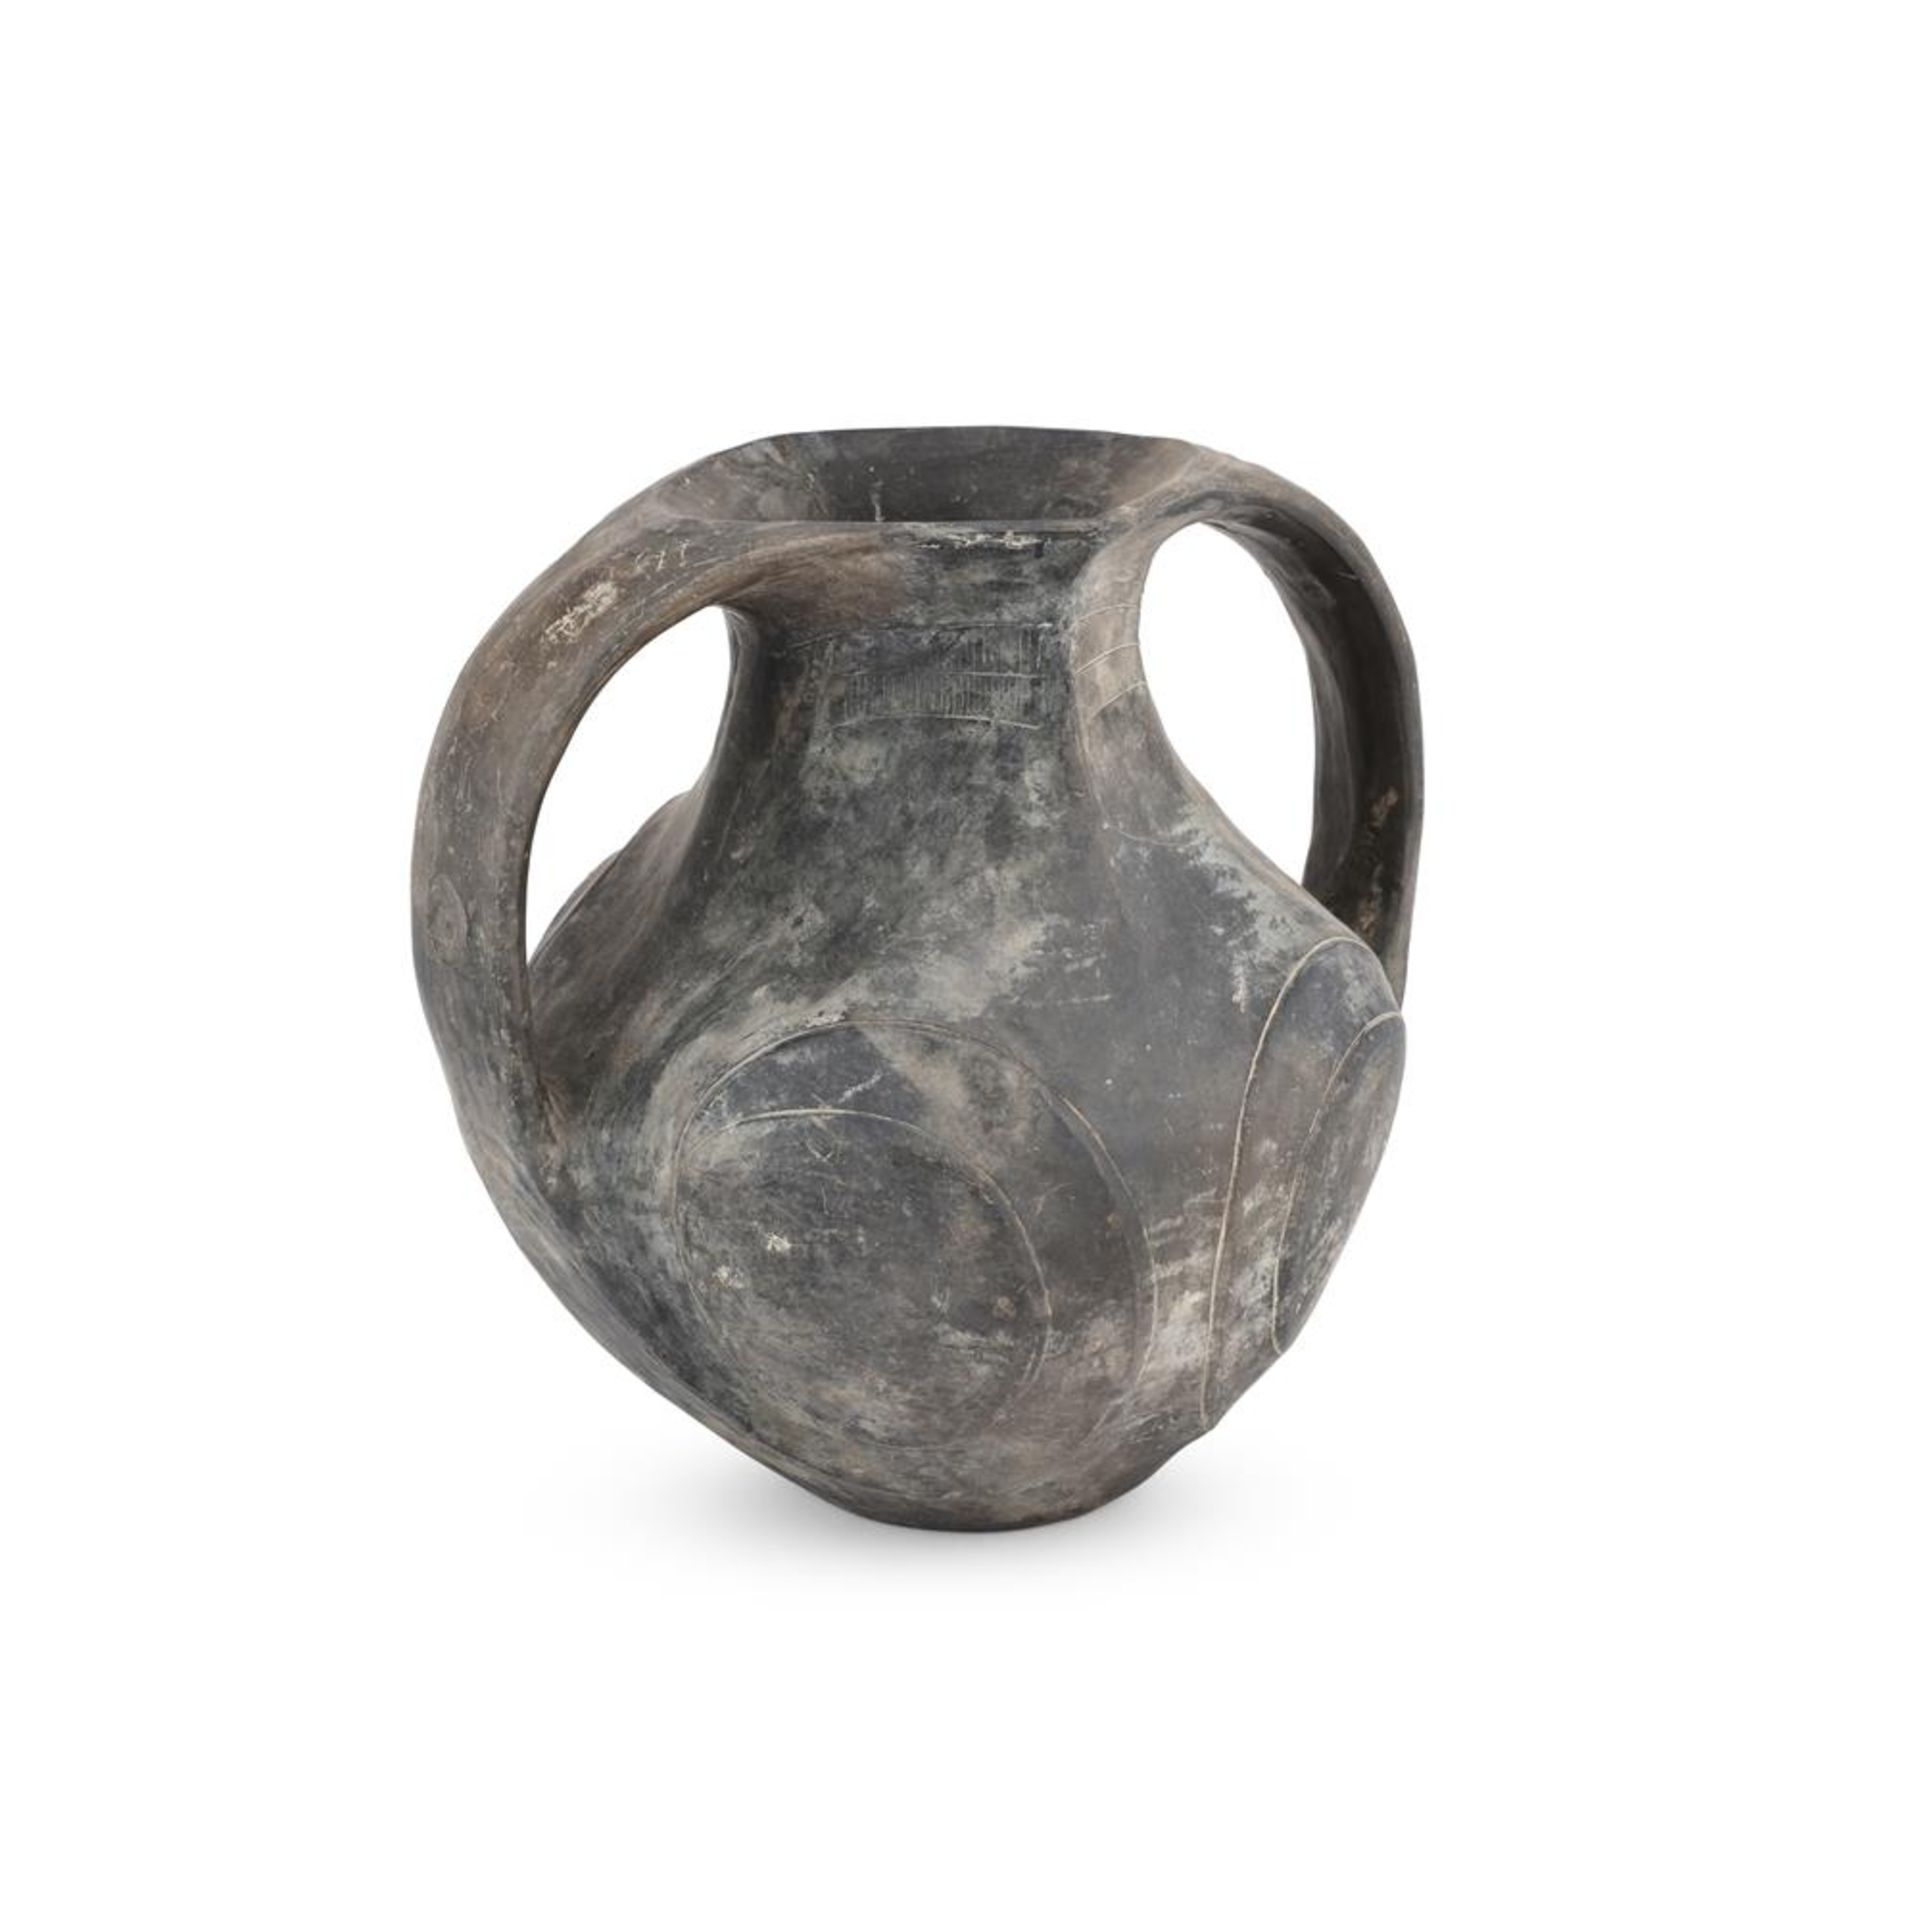 A Chinese black pottery amphora